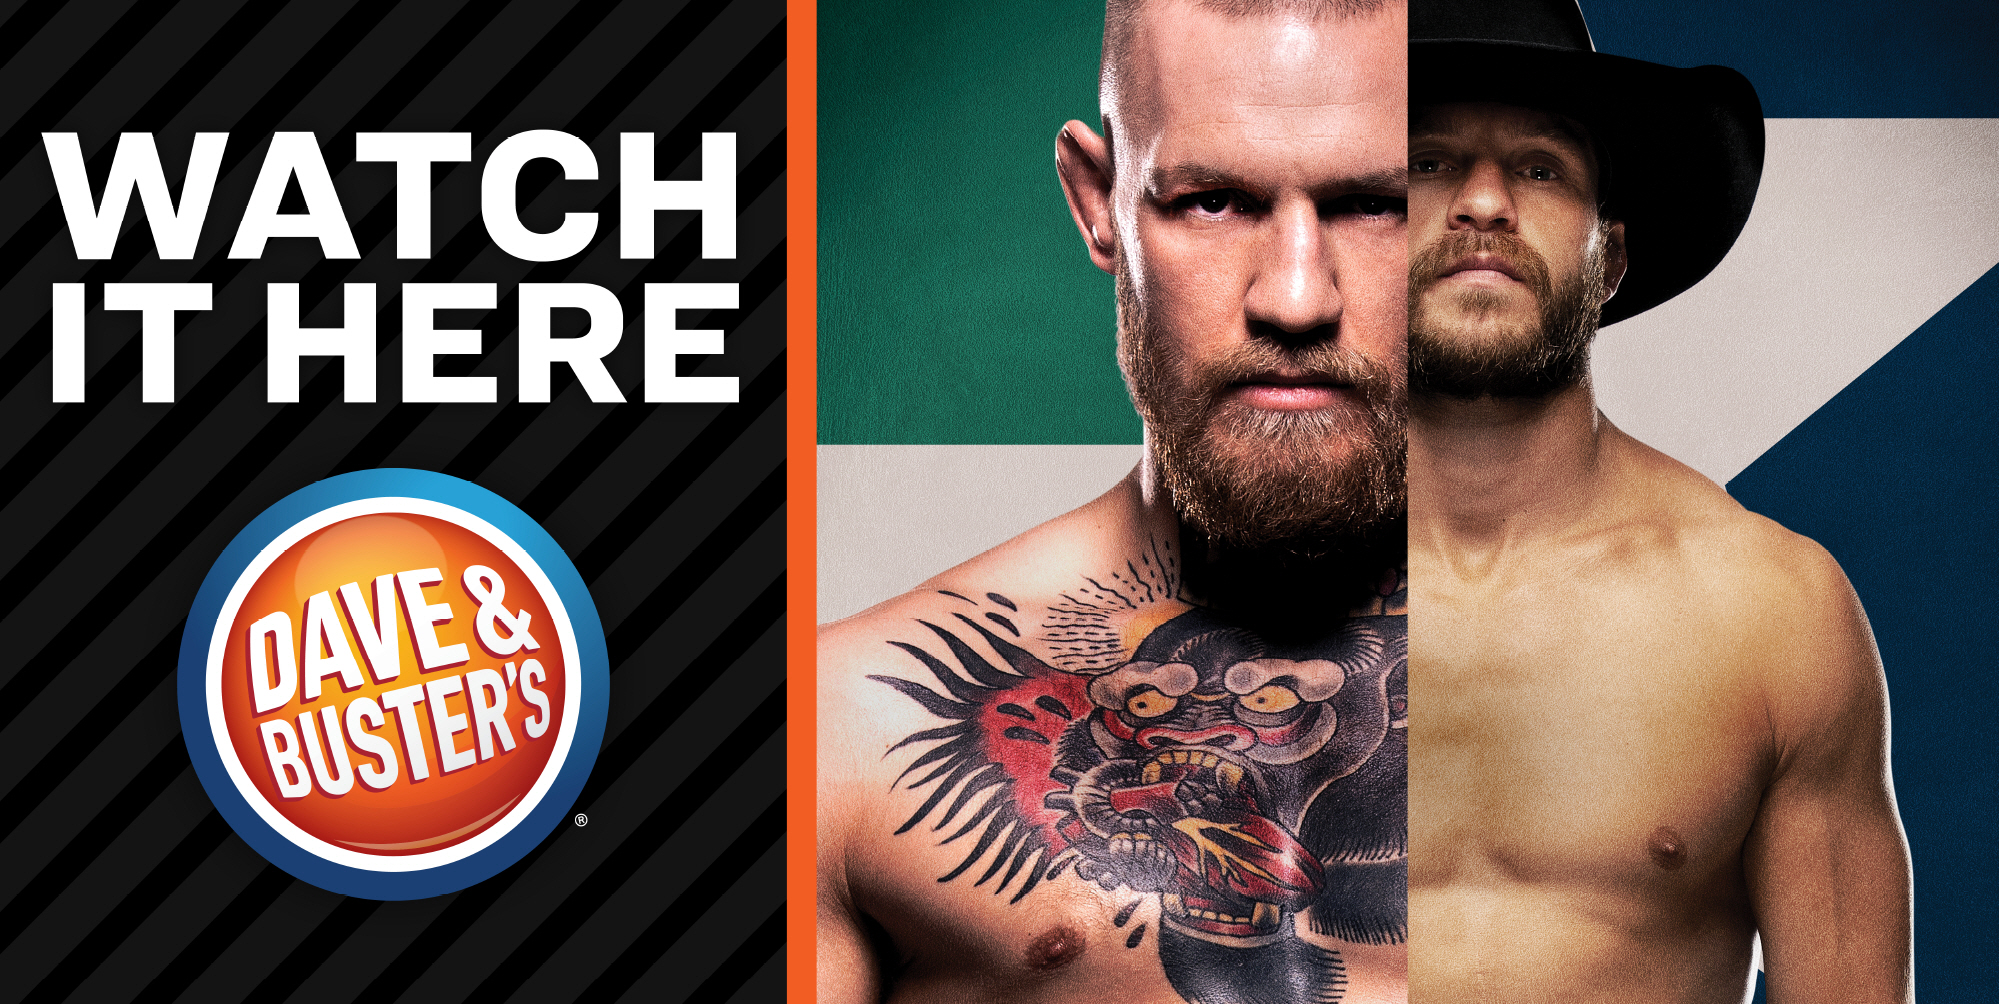 Dave & Buster's Palisades - UFC 246: McGregor vs. Cowboy Watch Party - Palisades Center